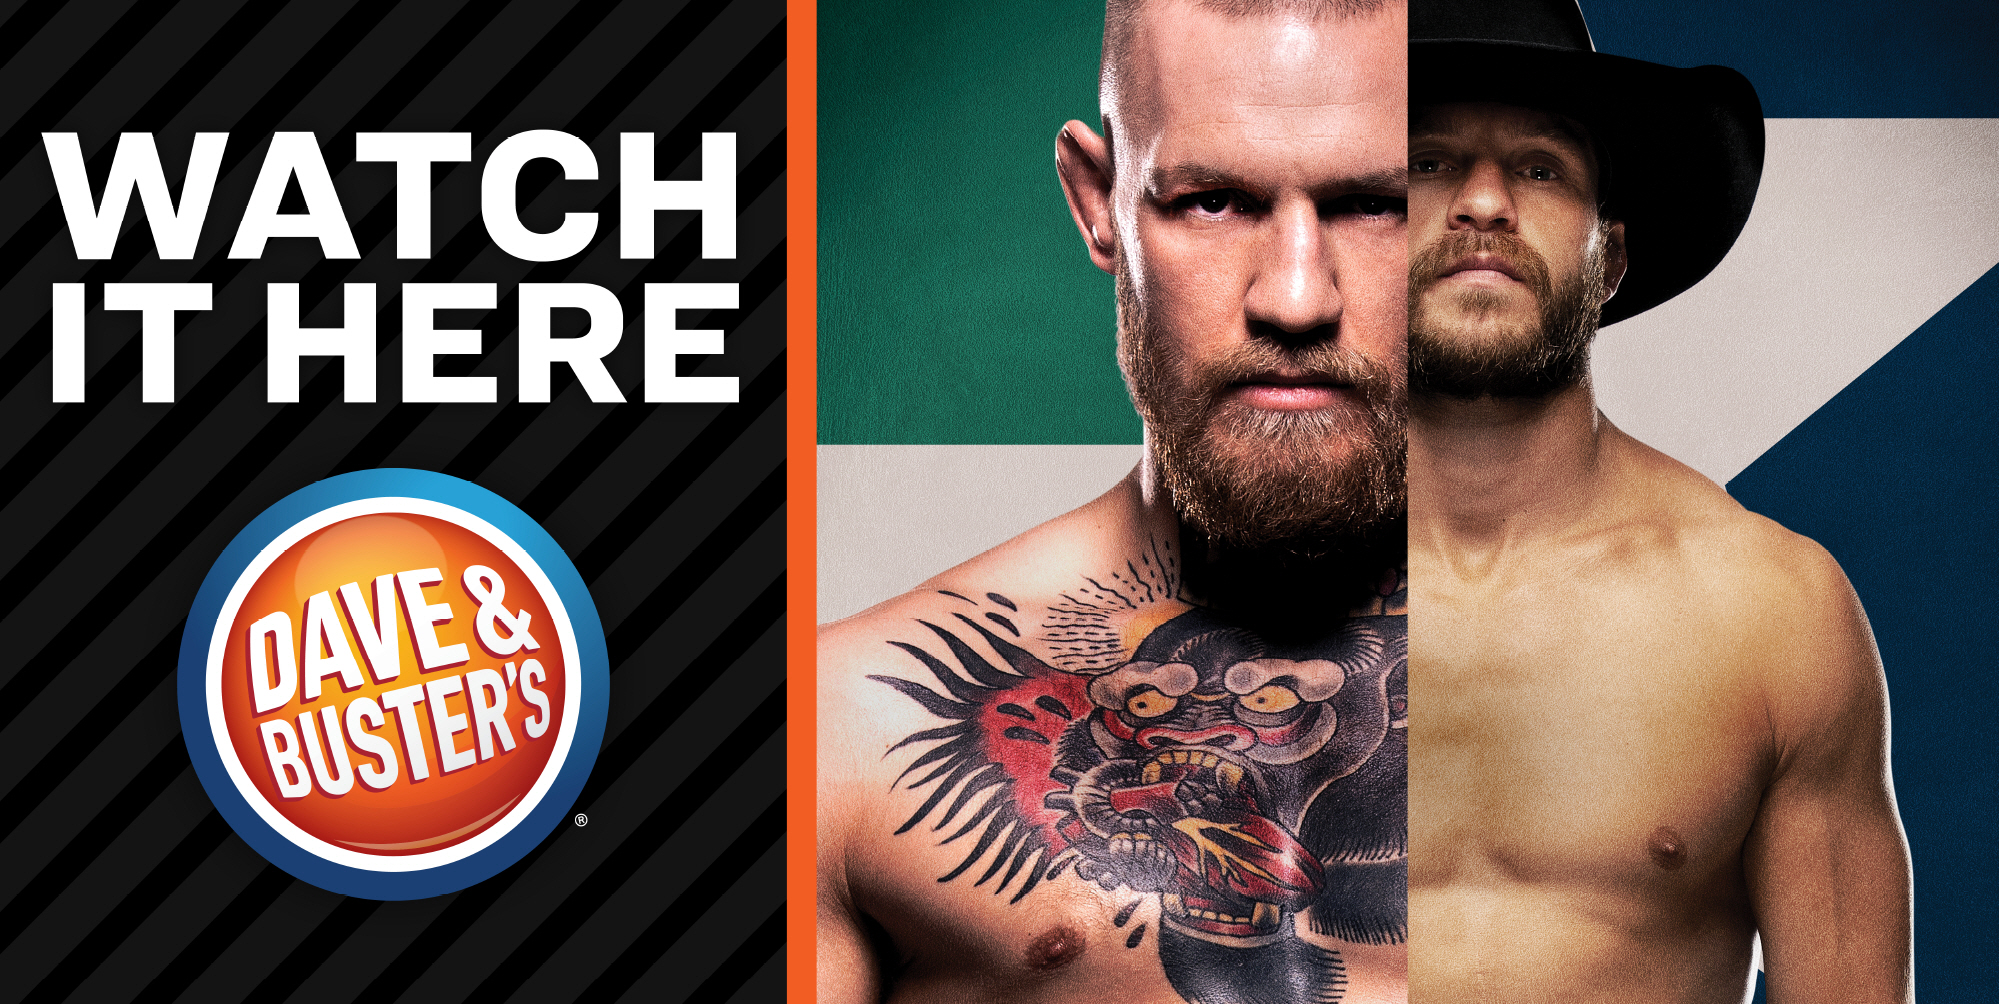 Dave & Buster's Palisades - UFC 246: McGregor vs. Cowboy Watch Party - Palisades Center